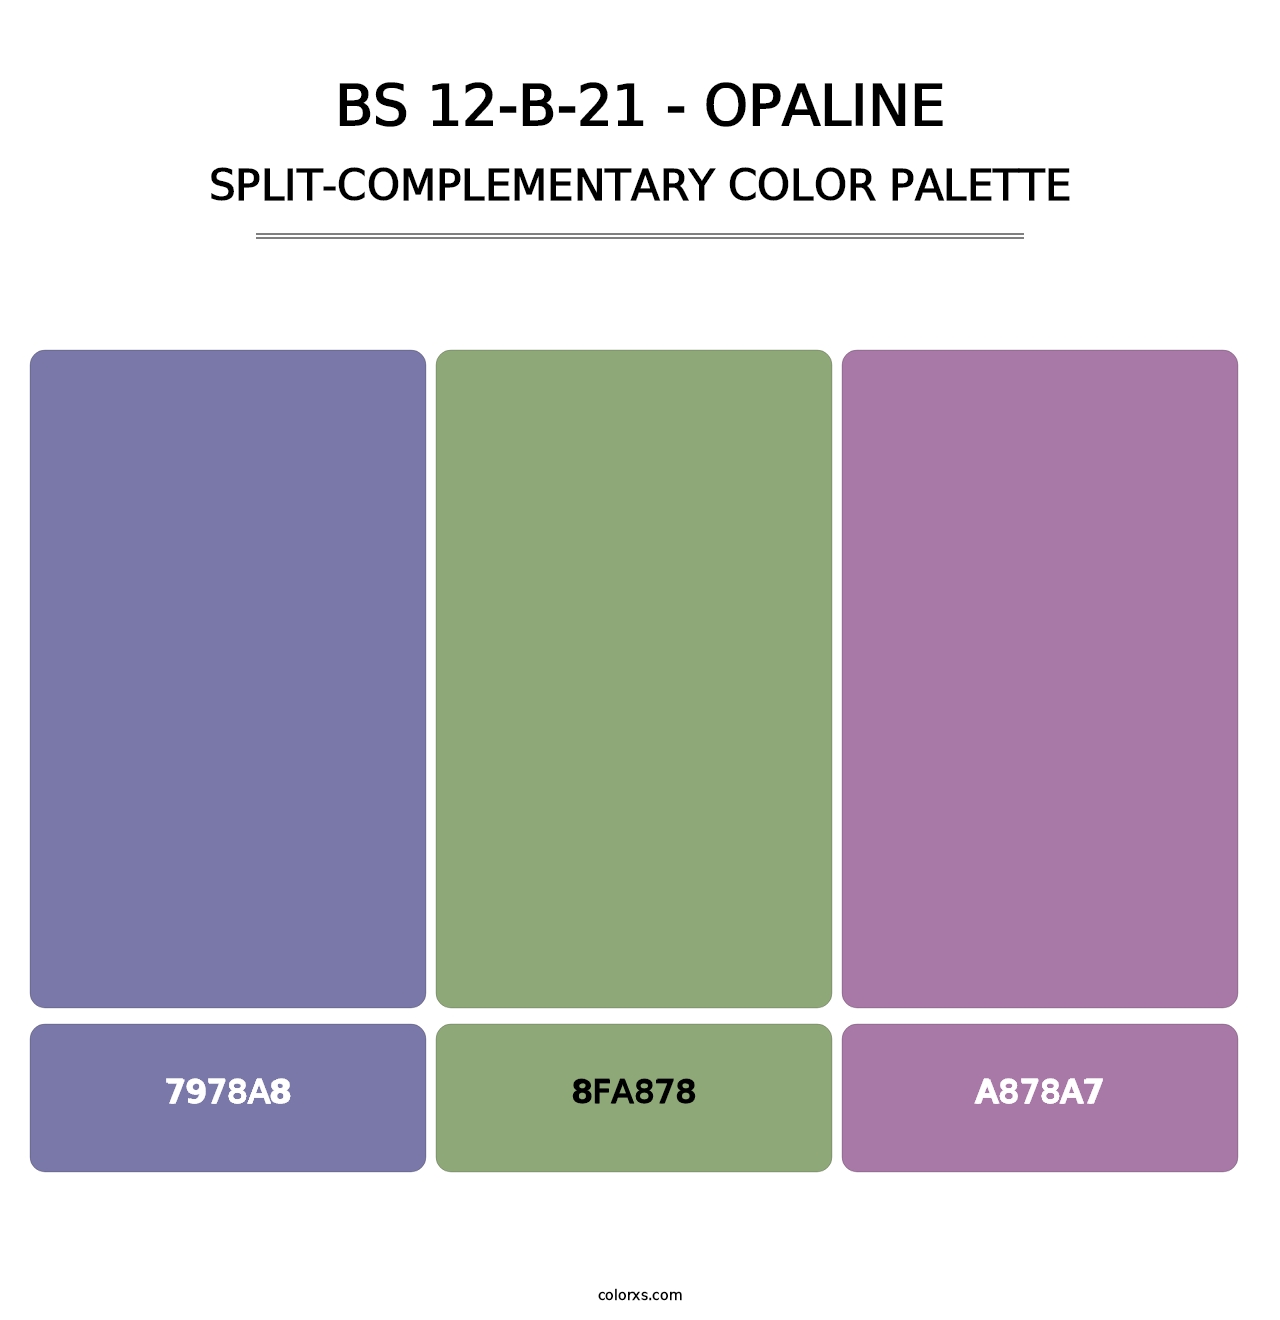 BS 12-B-21 - Opaline - Split-Complementary Color Palette